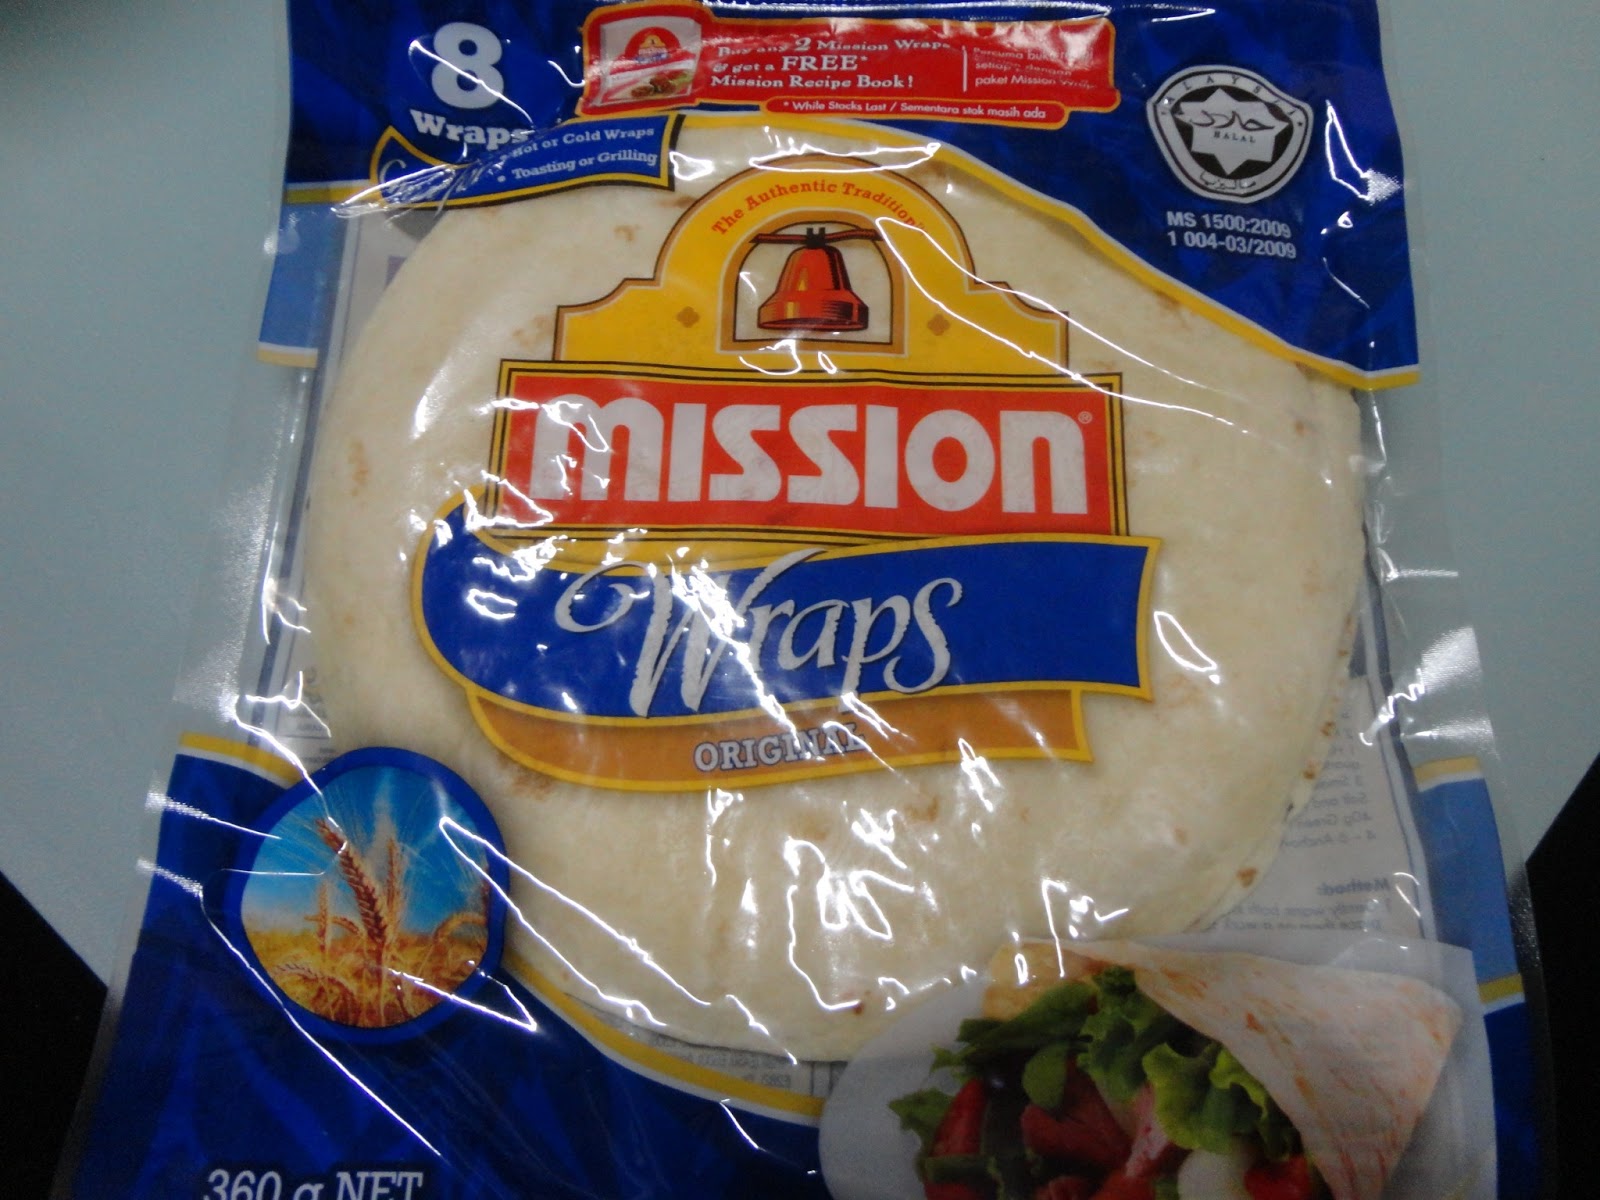 Husna's Life: RESEPI : roti tortilla daging